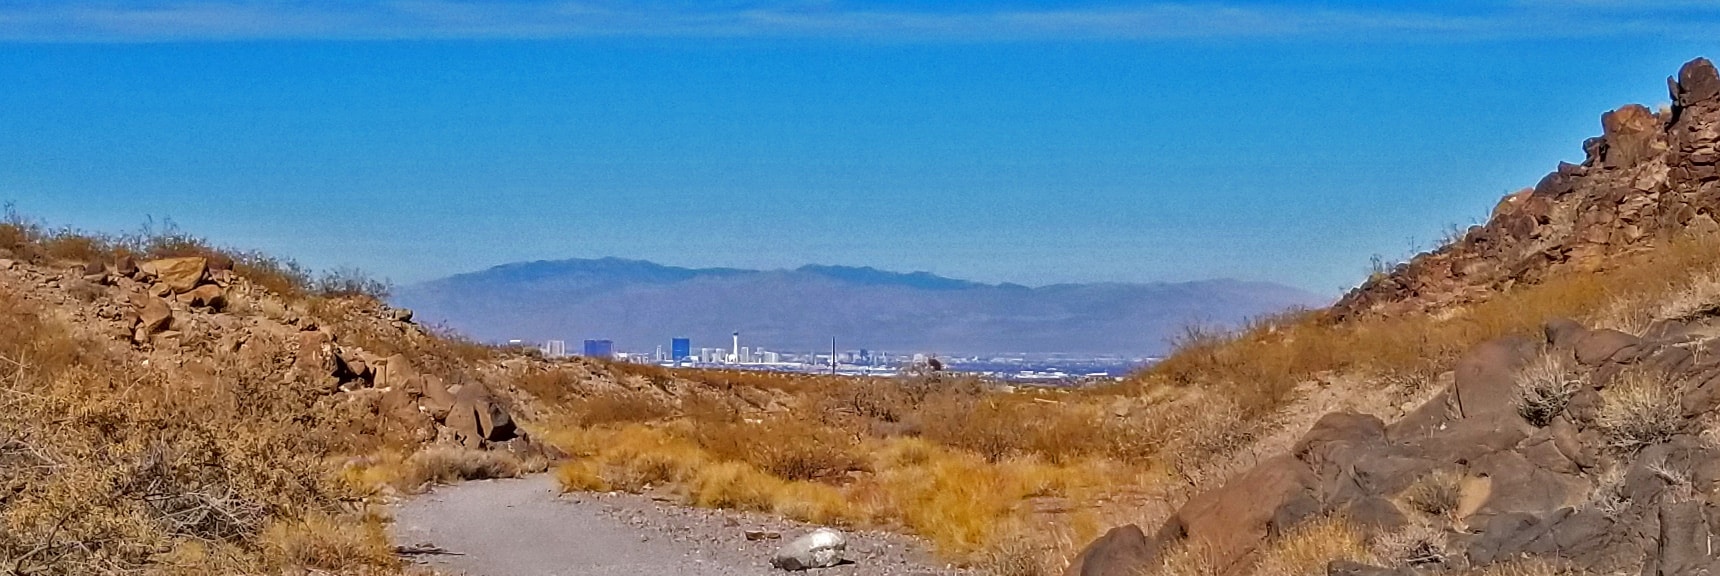 Las Vegas Strip Viewed from Lower Petroglyph Canyon | Petroglyph Canyon | Sloan Canyon National Conservation Area, Nevada